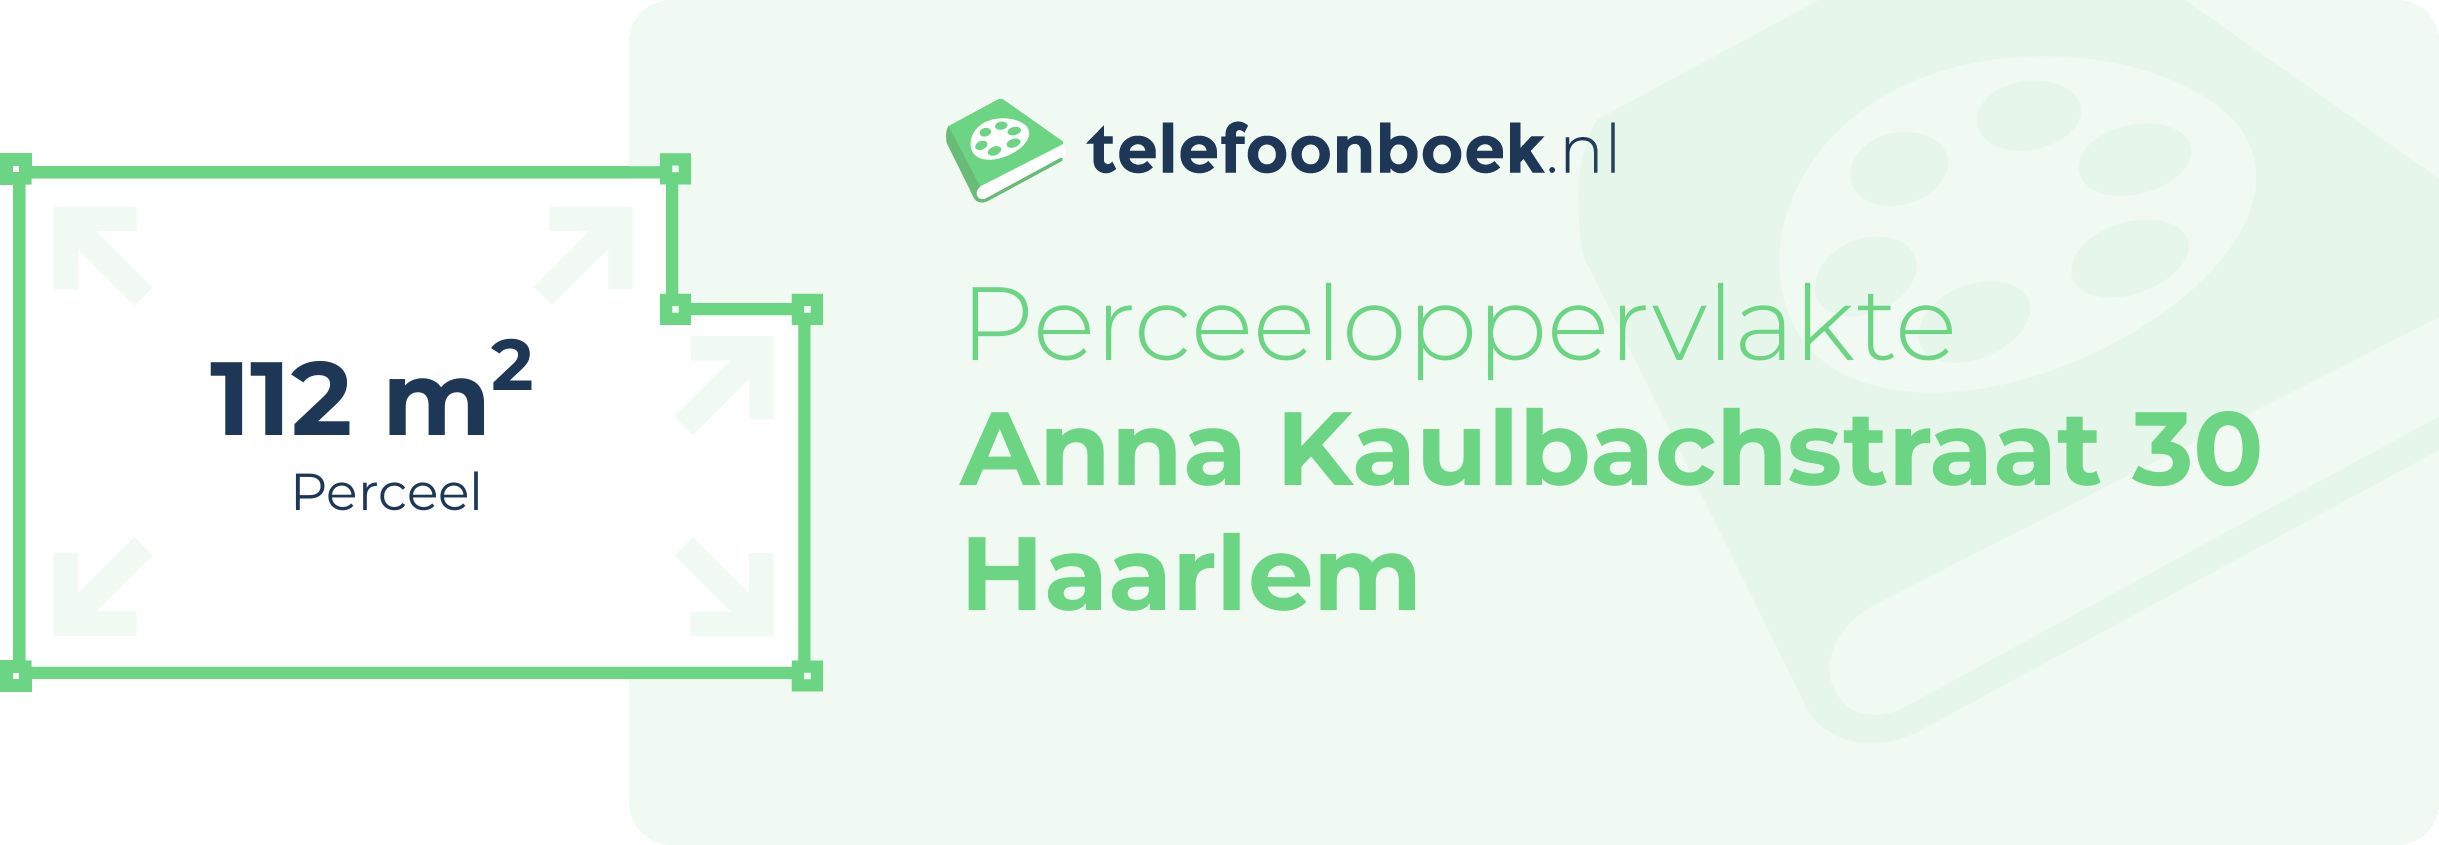 Perceeloppervlakte Anna Kaulbachstraat 30 Haarlem